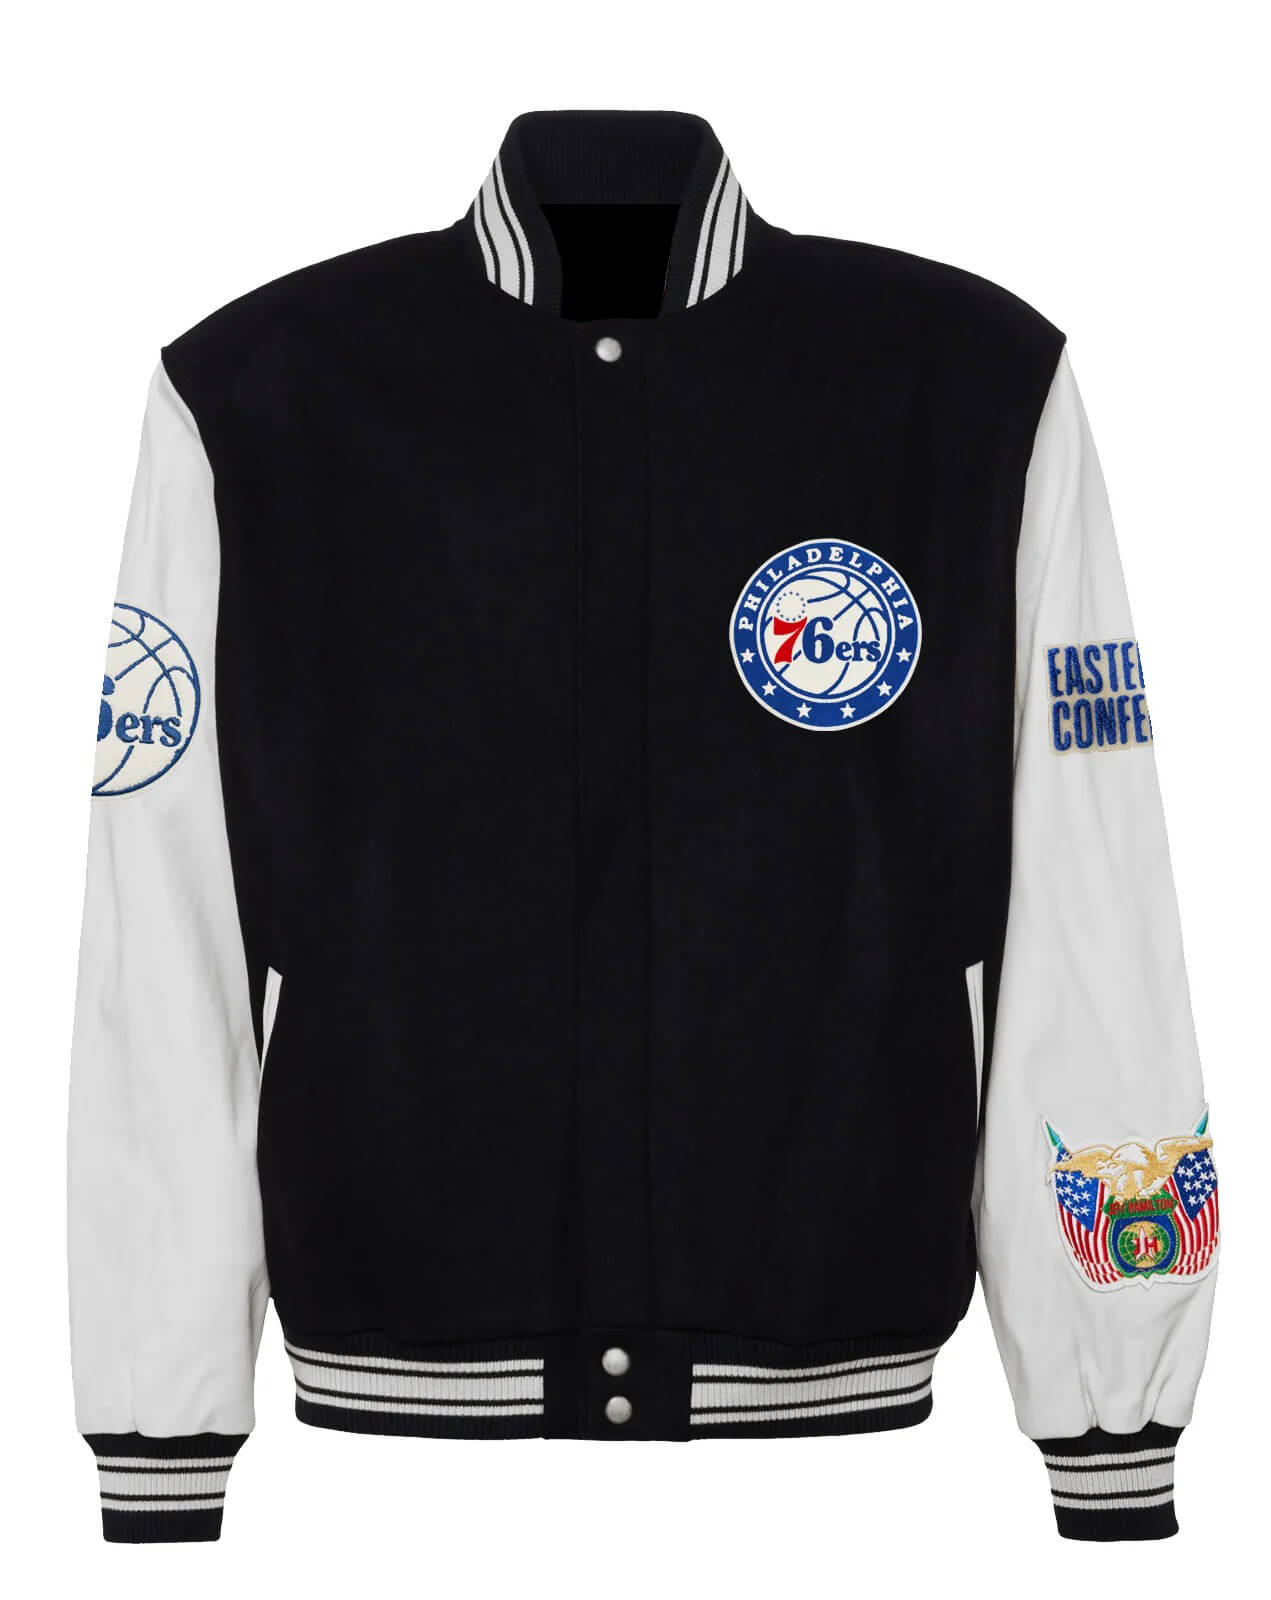 Maker of Jacket Fashion Jackets NBA Philadelphia 76ers Leather Bomber